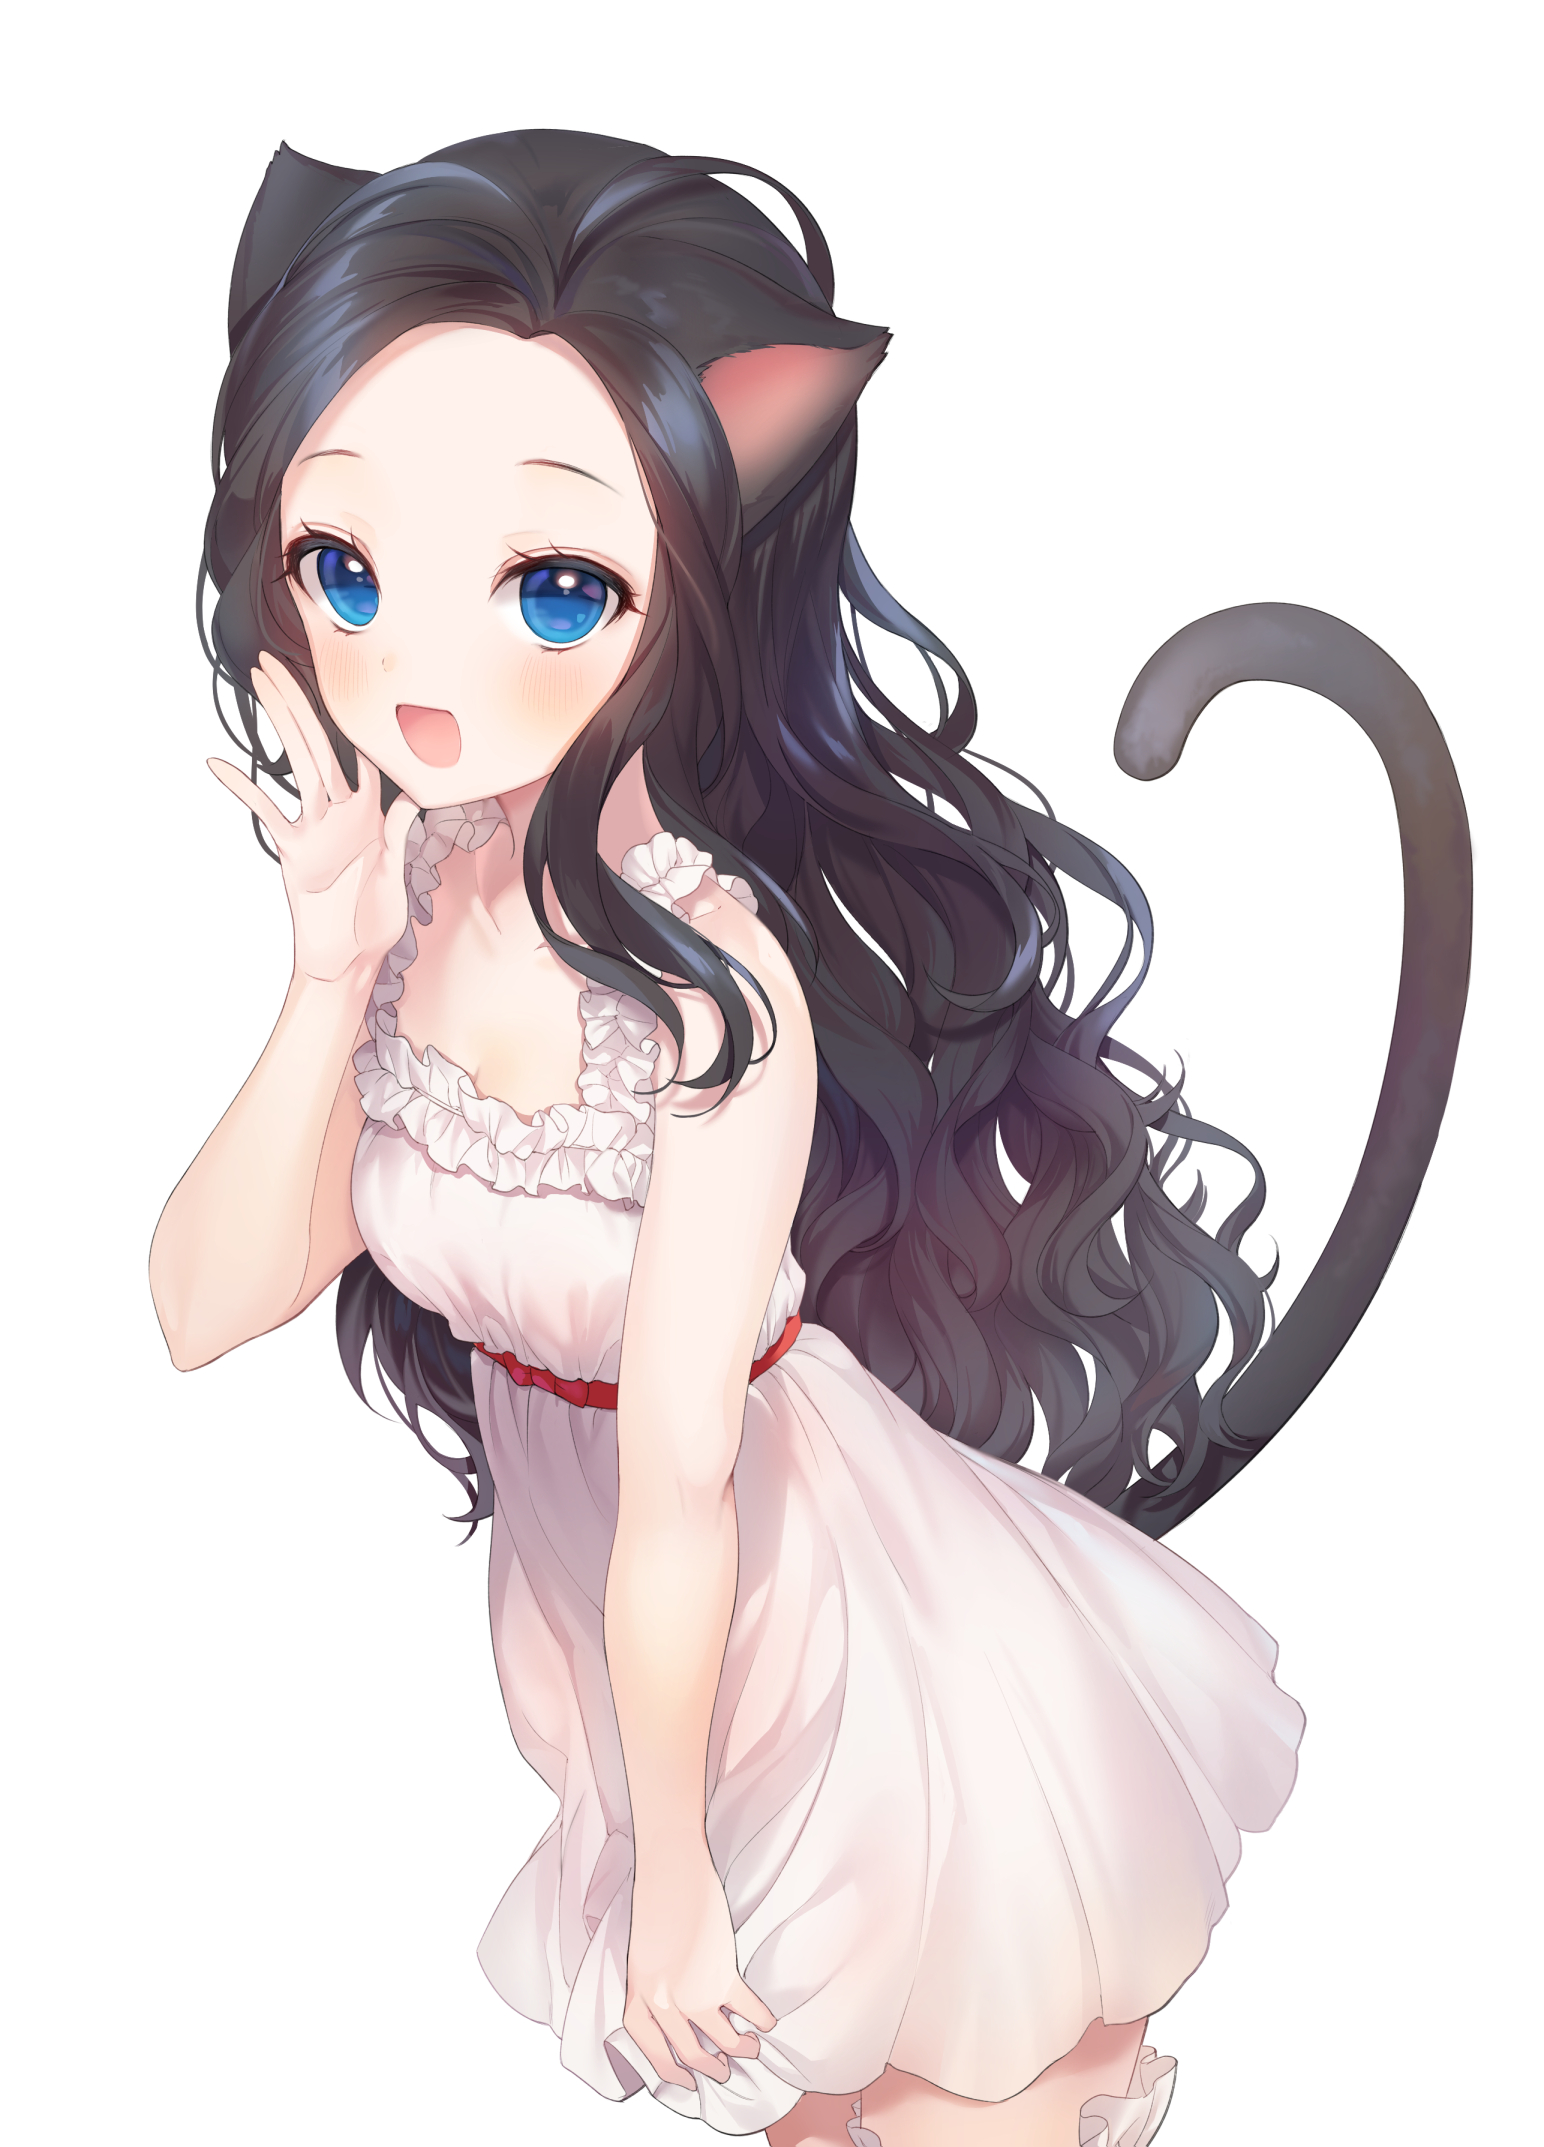 Anime 1544x2147 anime anime girls digital art artwork 2D portrait display cat girl black hair blue eyes sun dress